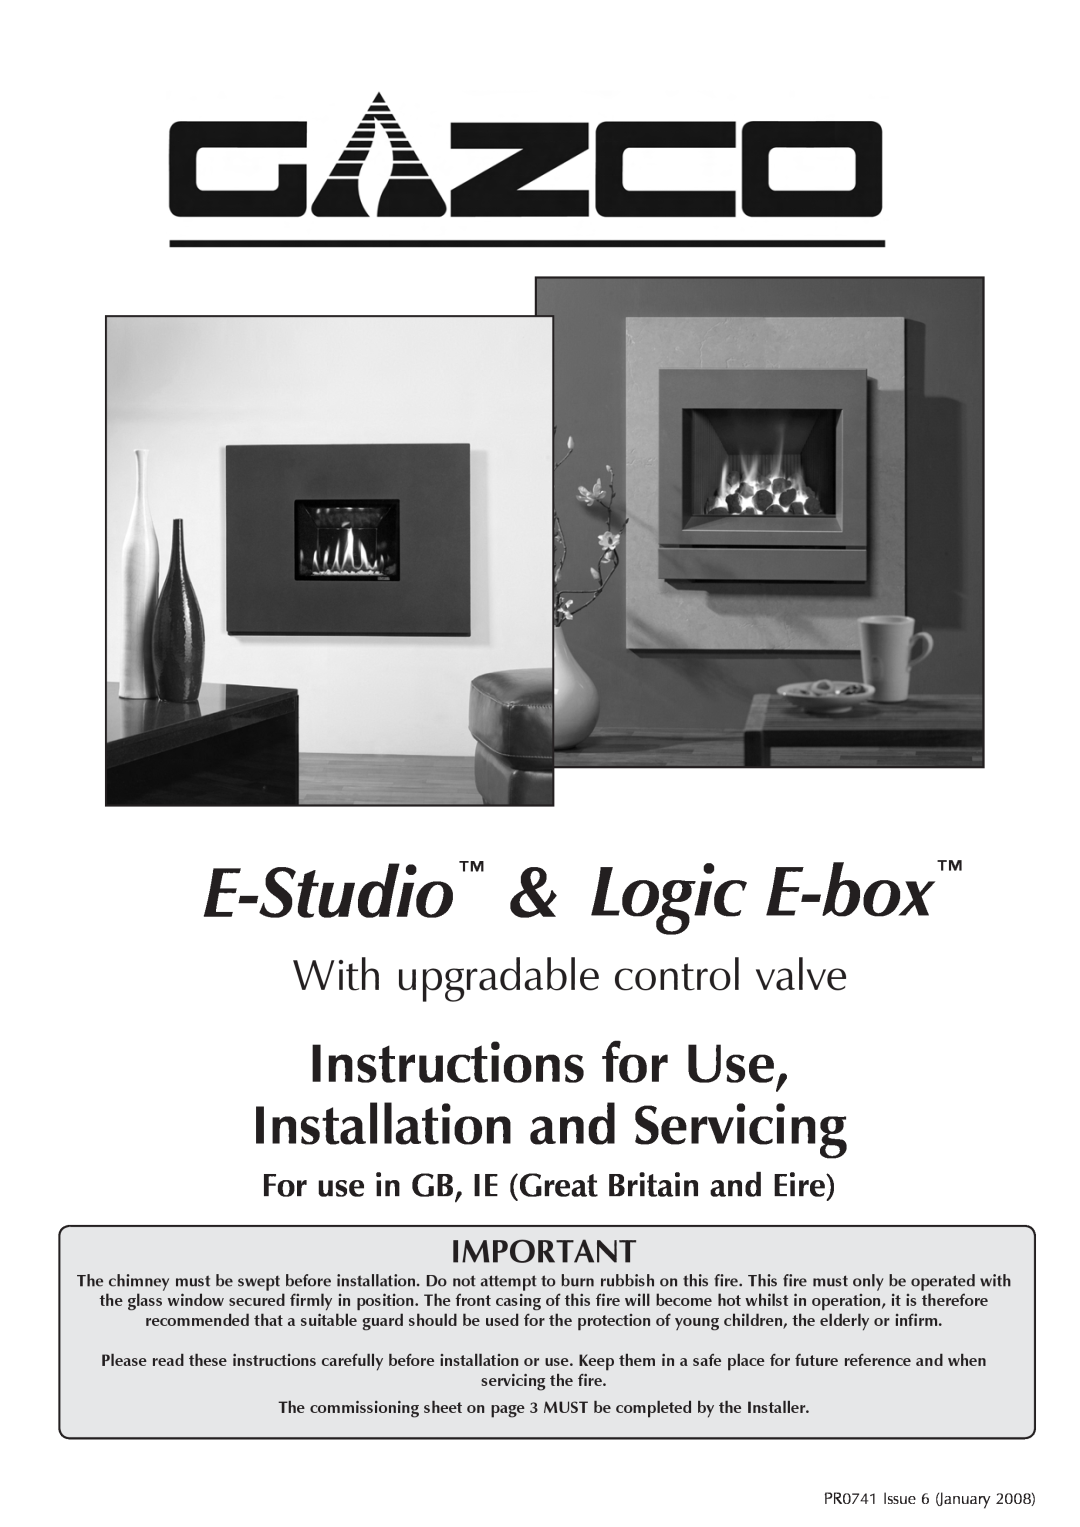 Stovax PR0741 manual E-Studio & Logic E-box, Instructions for Use Installation and Servicing, servicing the fire 